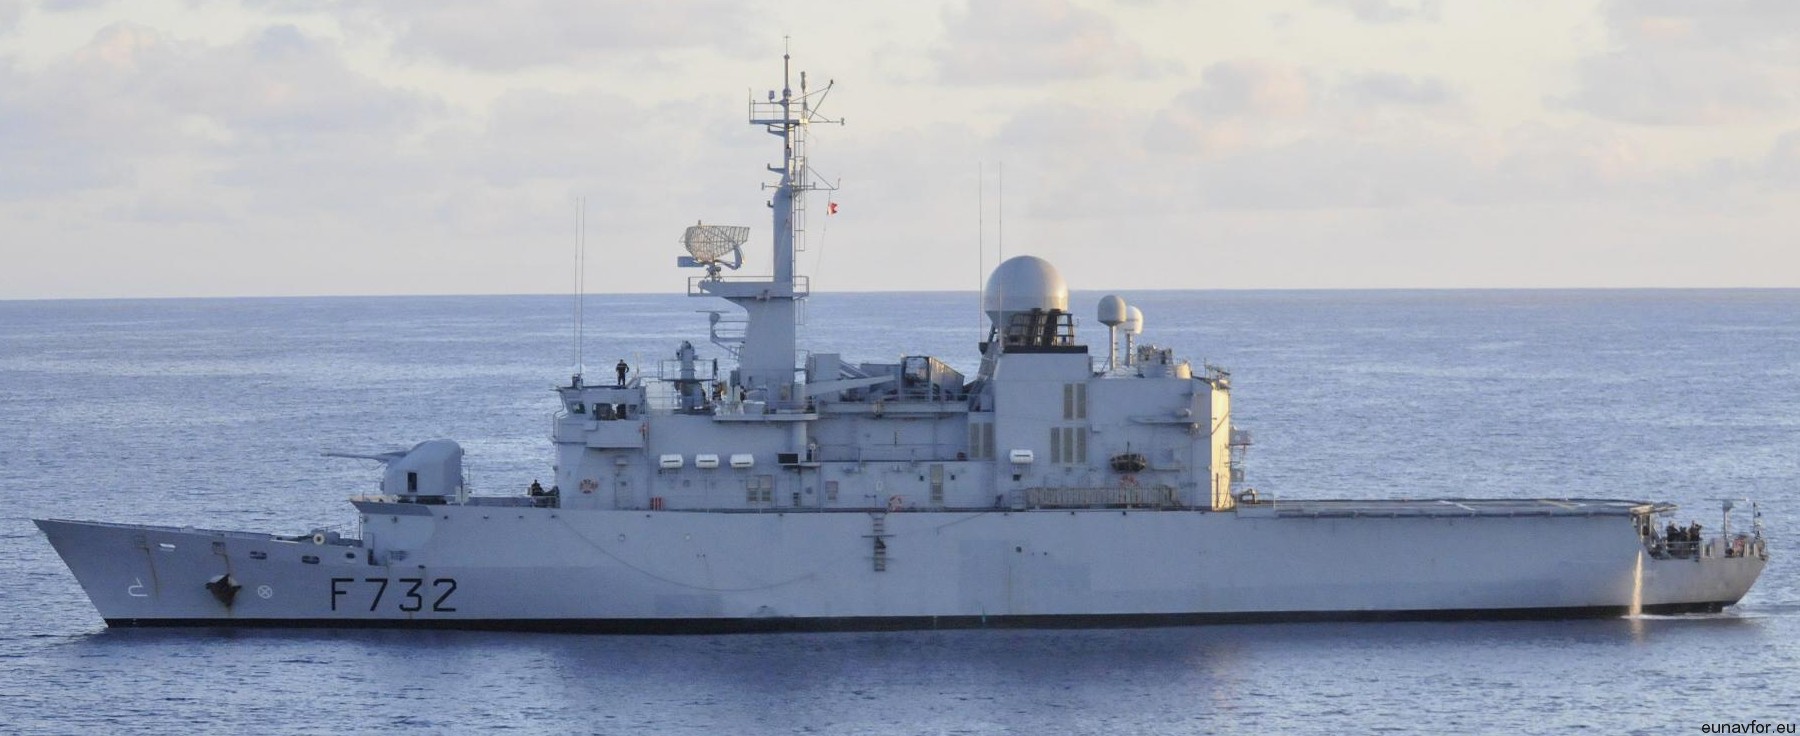 f-732 fs nivose floreal class frigate french navy marine nationale fregate surveillance 06 eunavfor